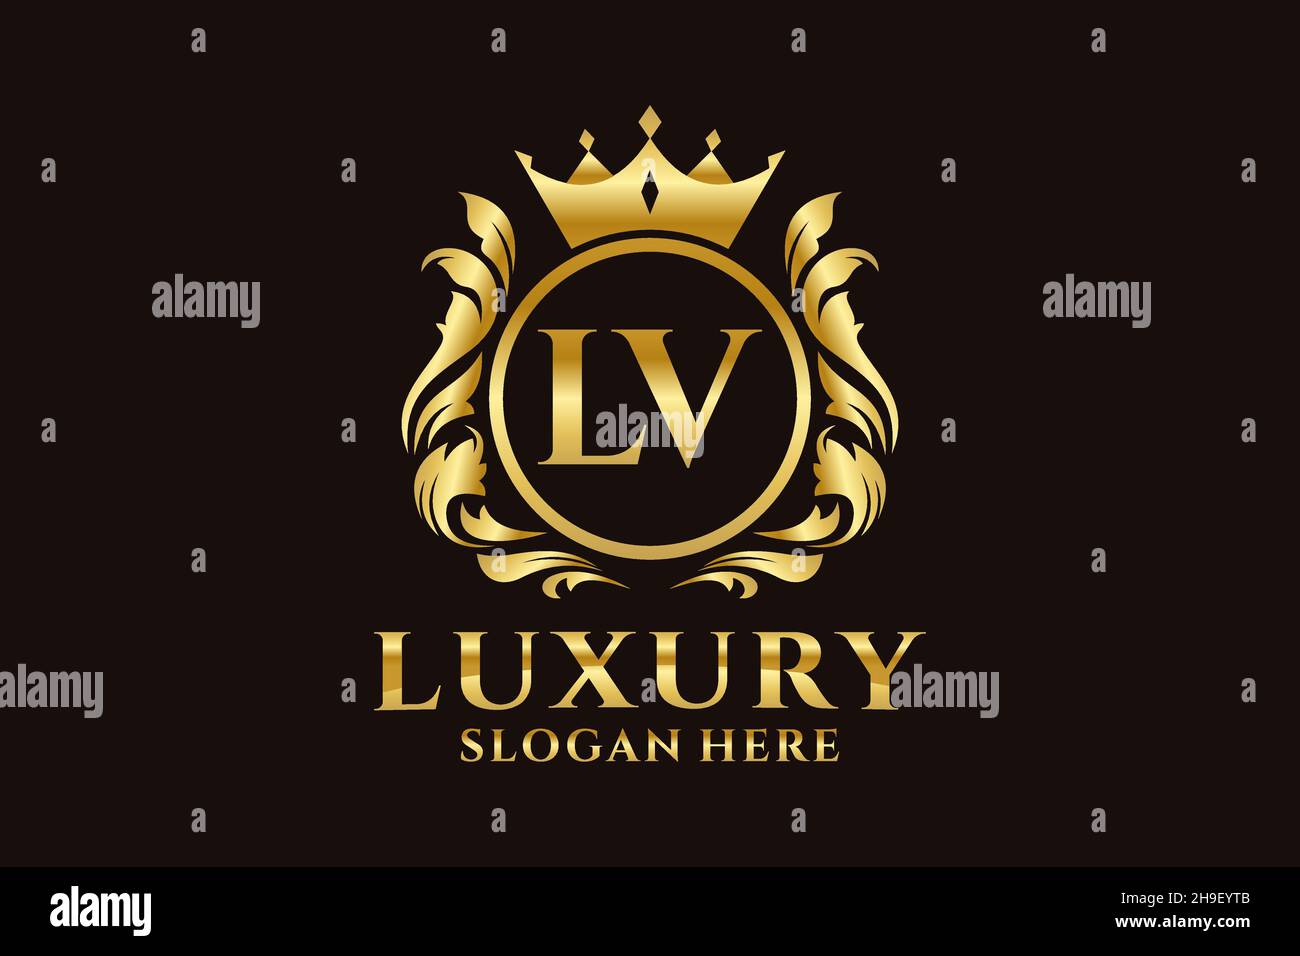  LV Monogram Elegant Floral Luxury Letter LV Initials